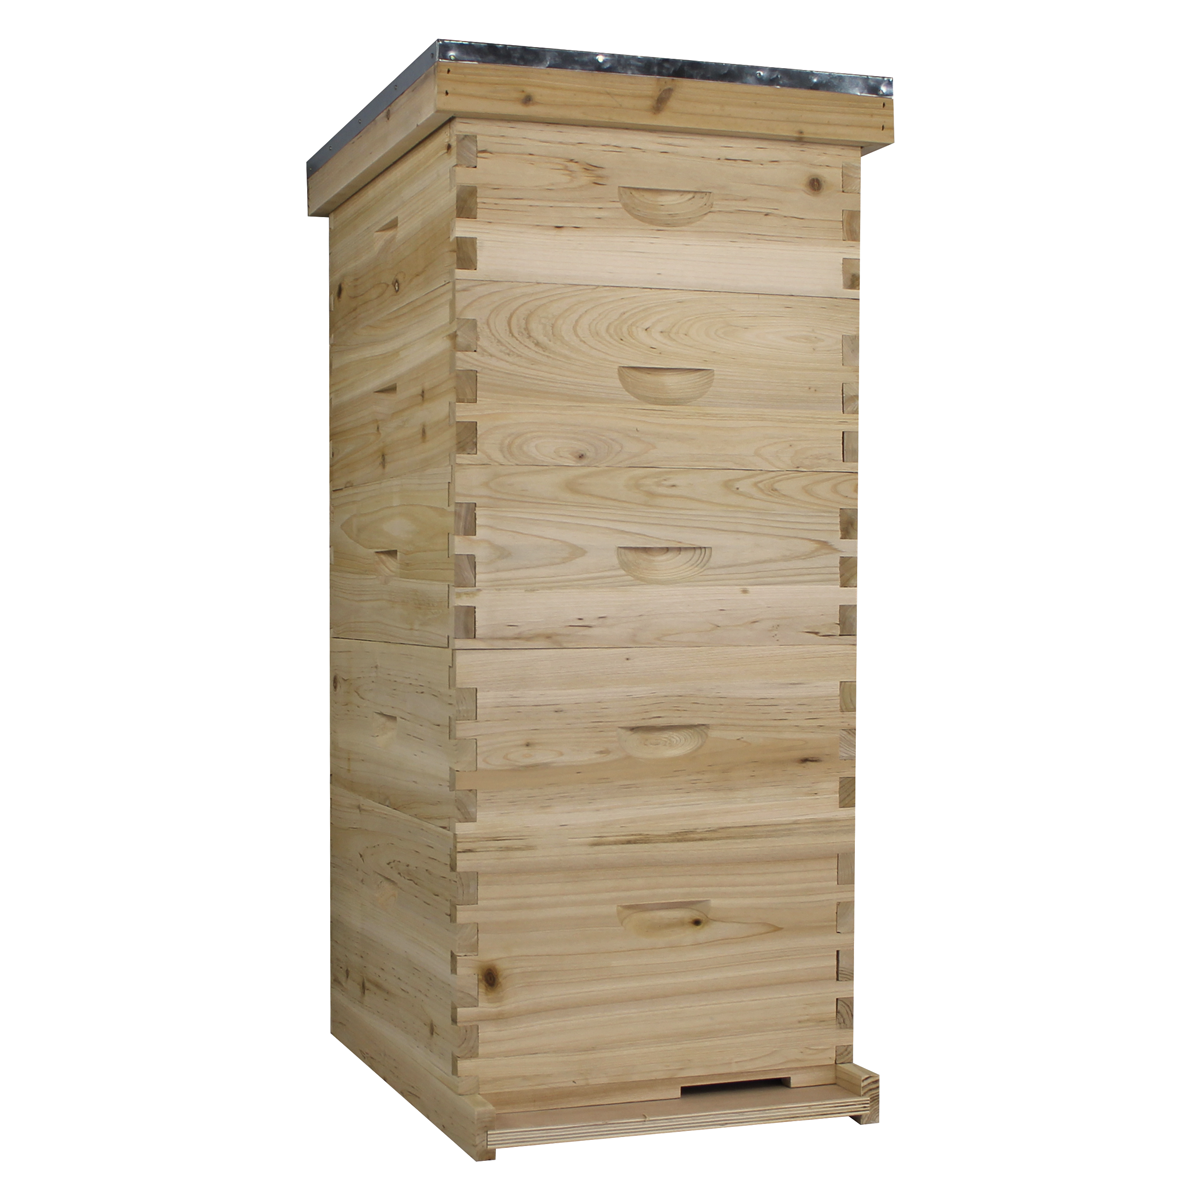 NuBee 10 Frame Beehive With 1 Deep Bee Box & 4 Medium Bee Boxes